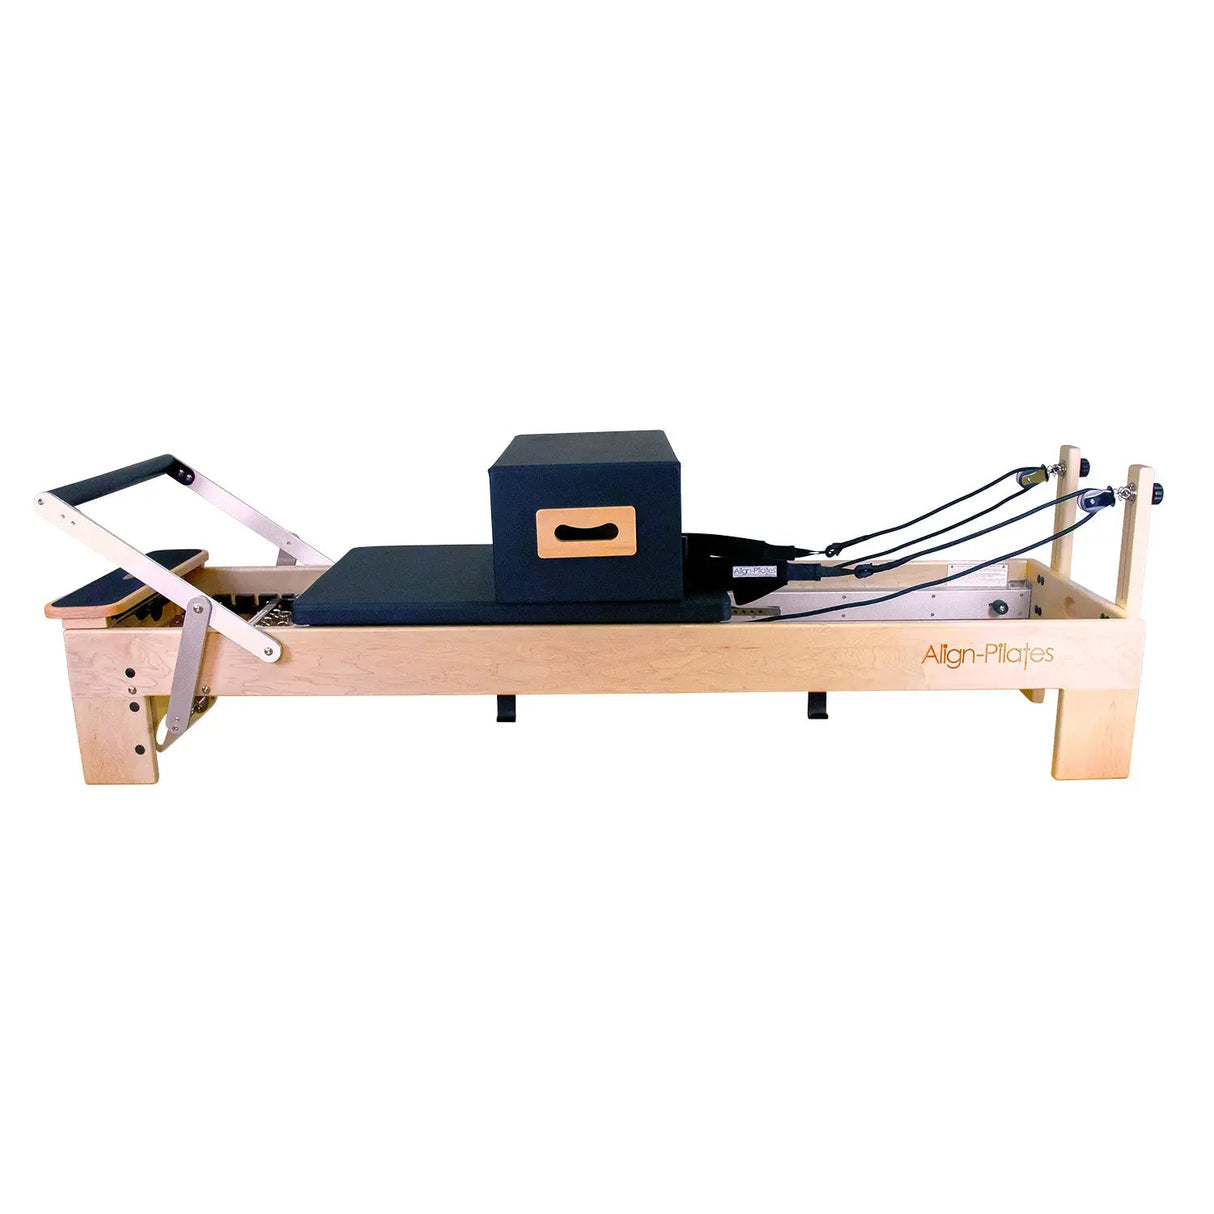 Align Pilates | M8-Pro Maple Wood Pilates Reformer w/ Pro Sitting Box